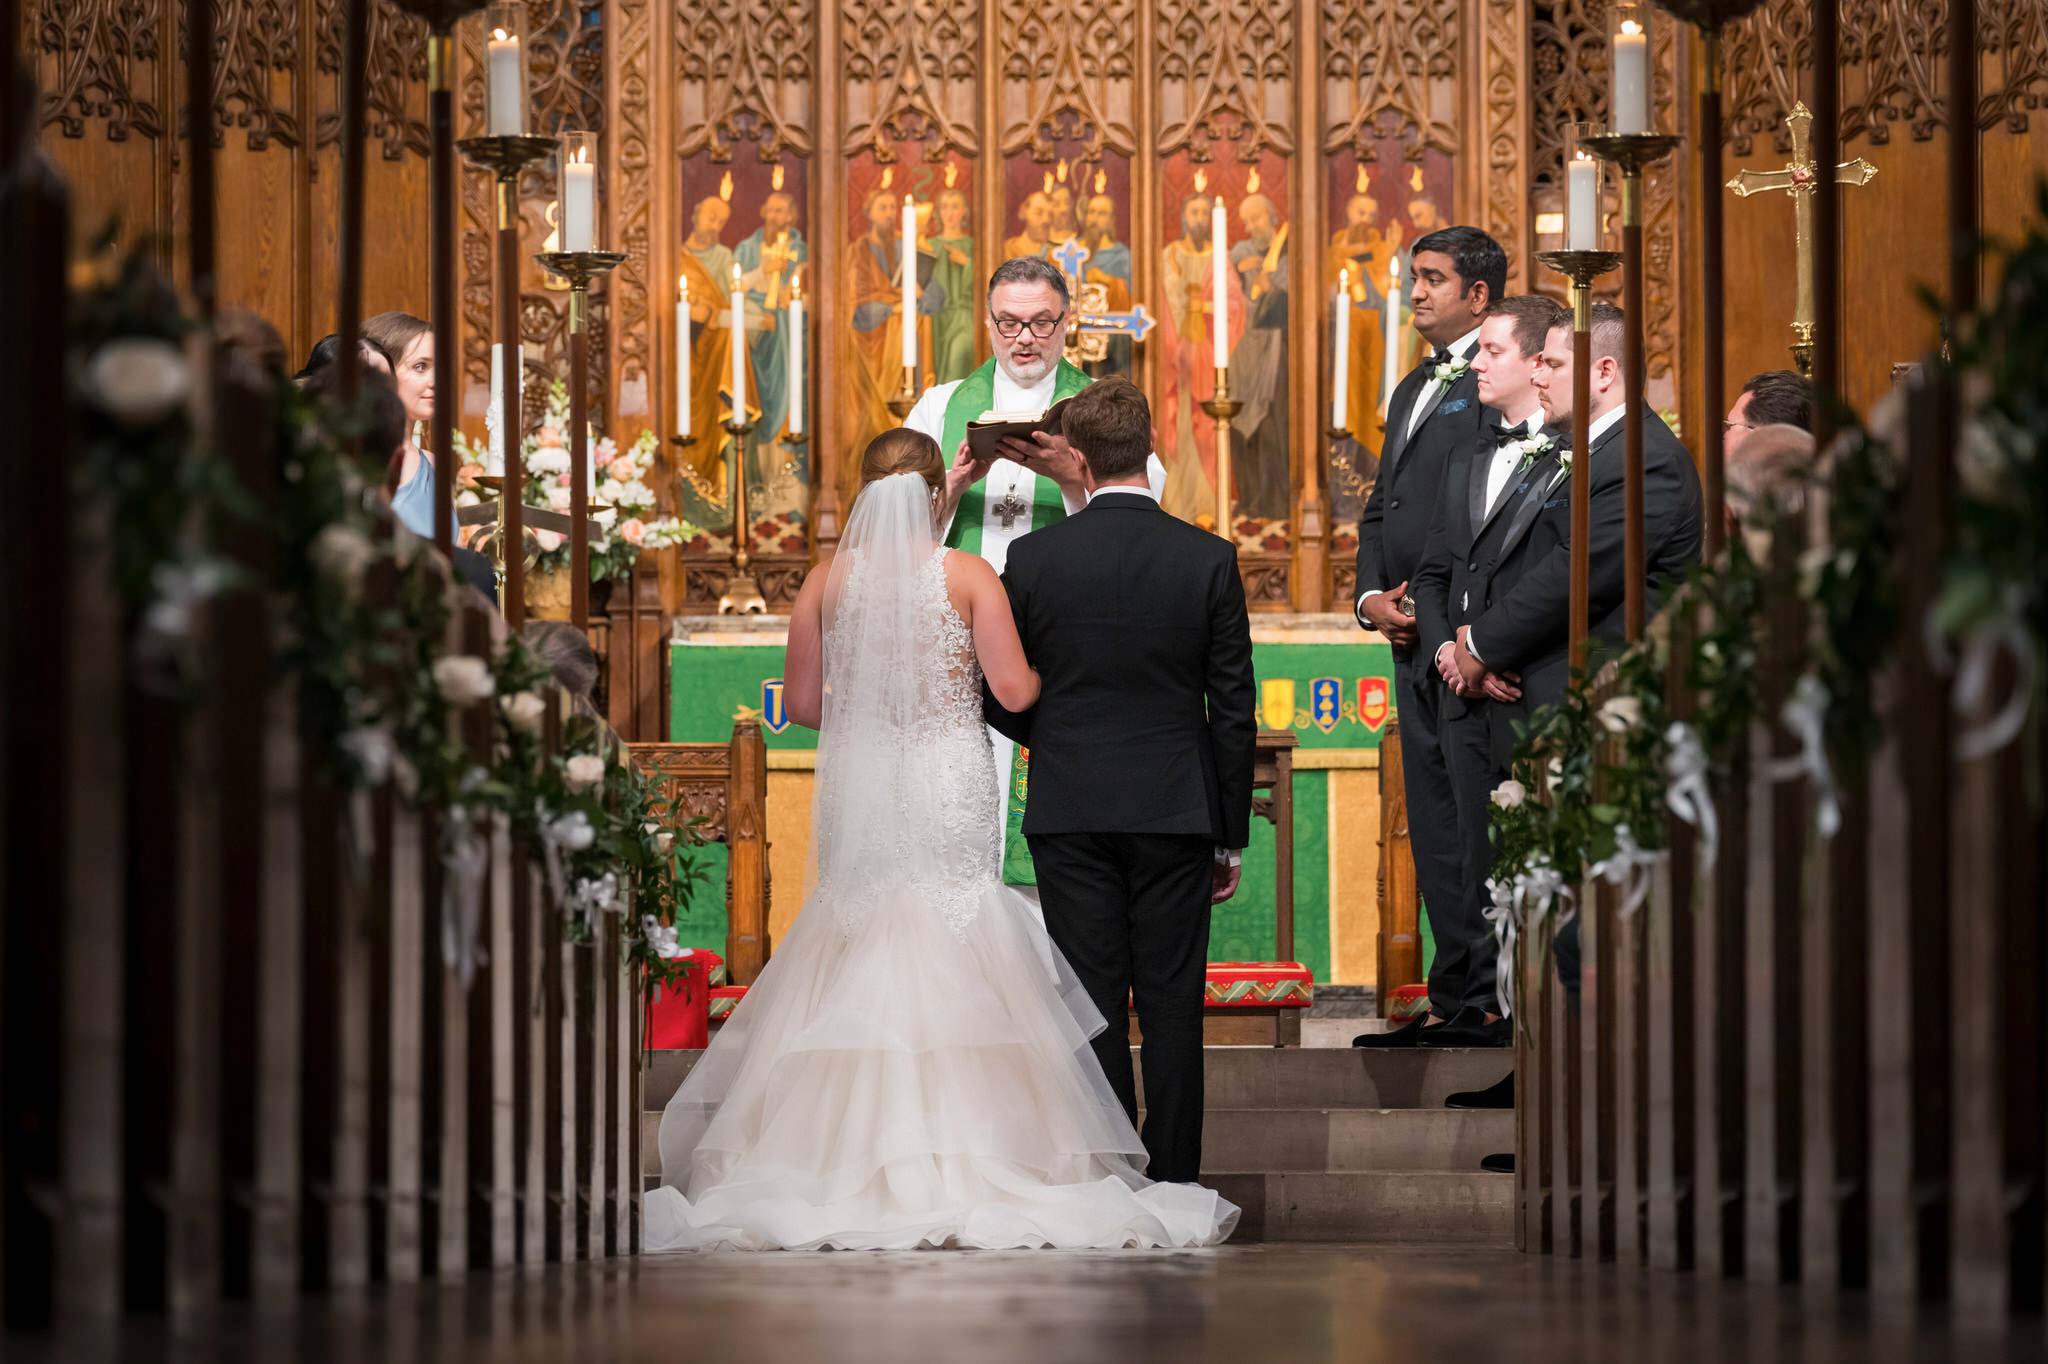 A wedding at Historic Trinity Lutheran Church in Detroit, Michigan.  